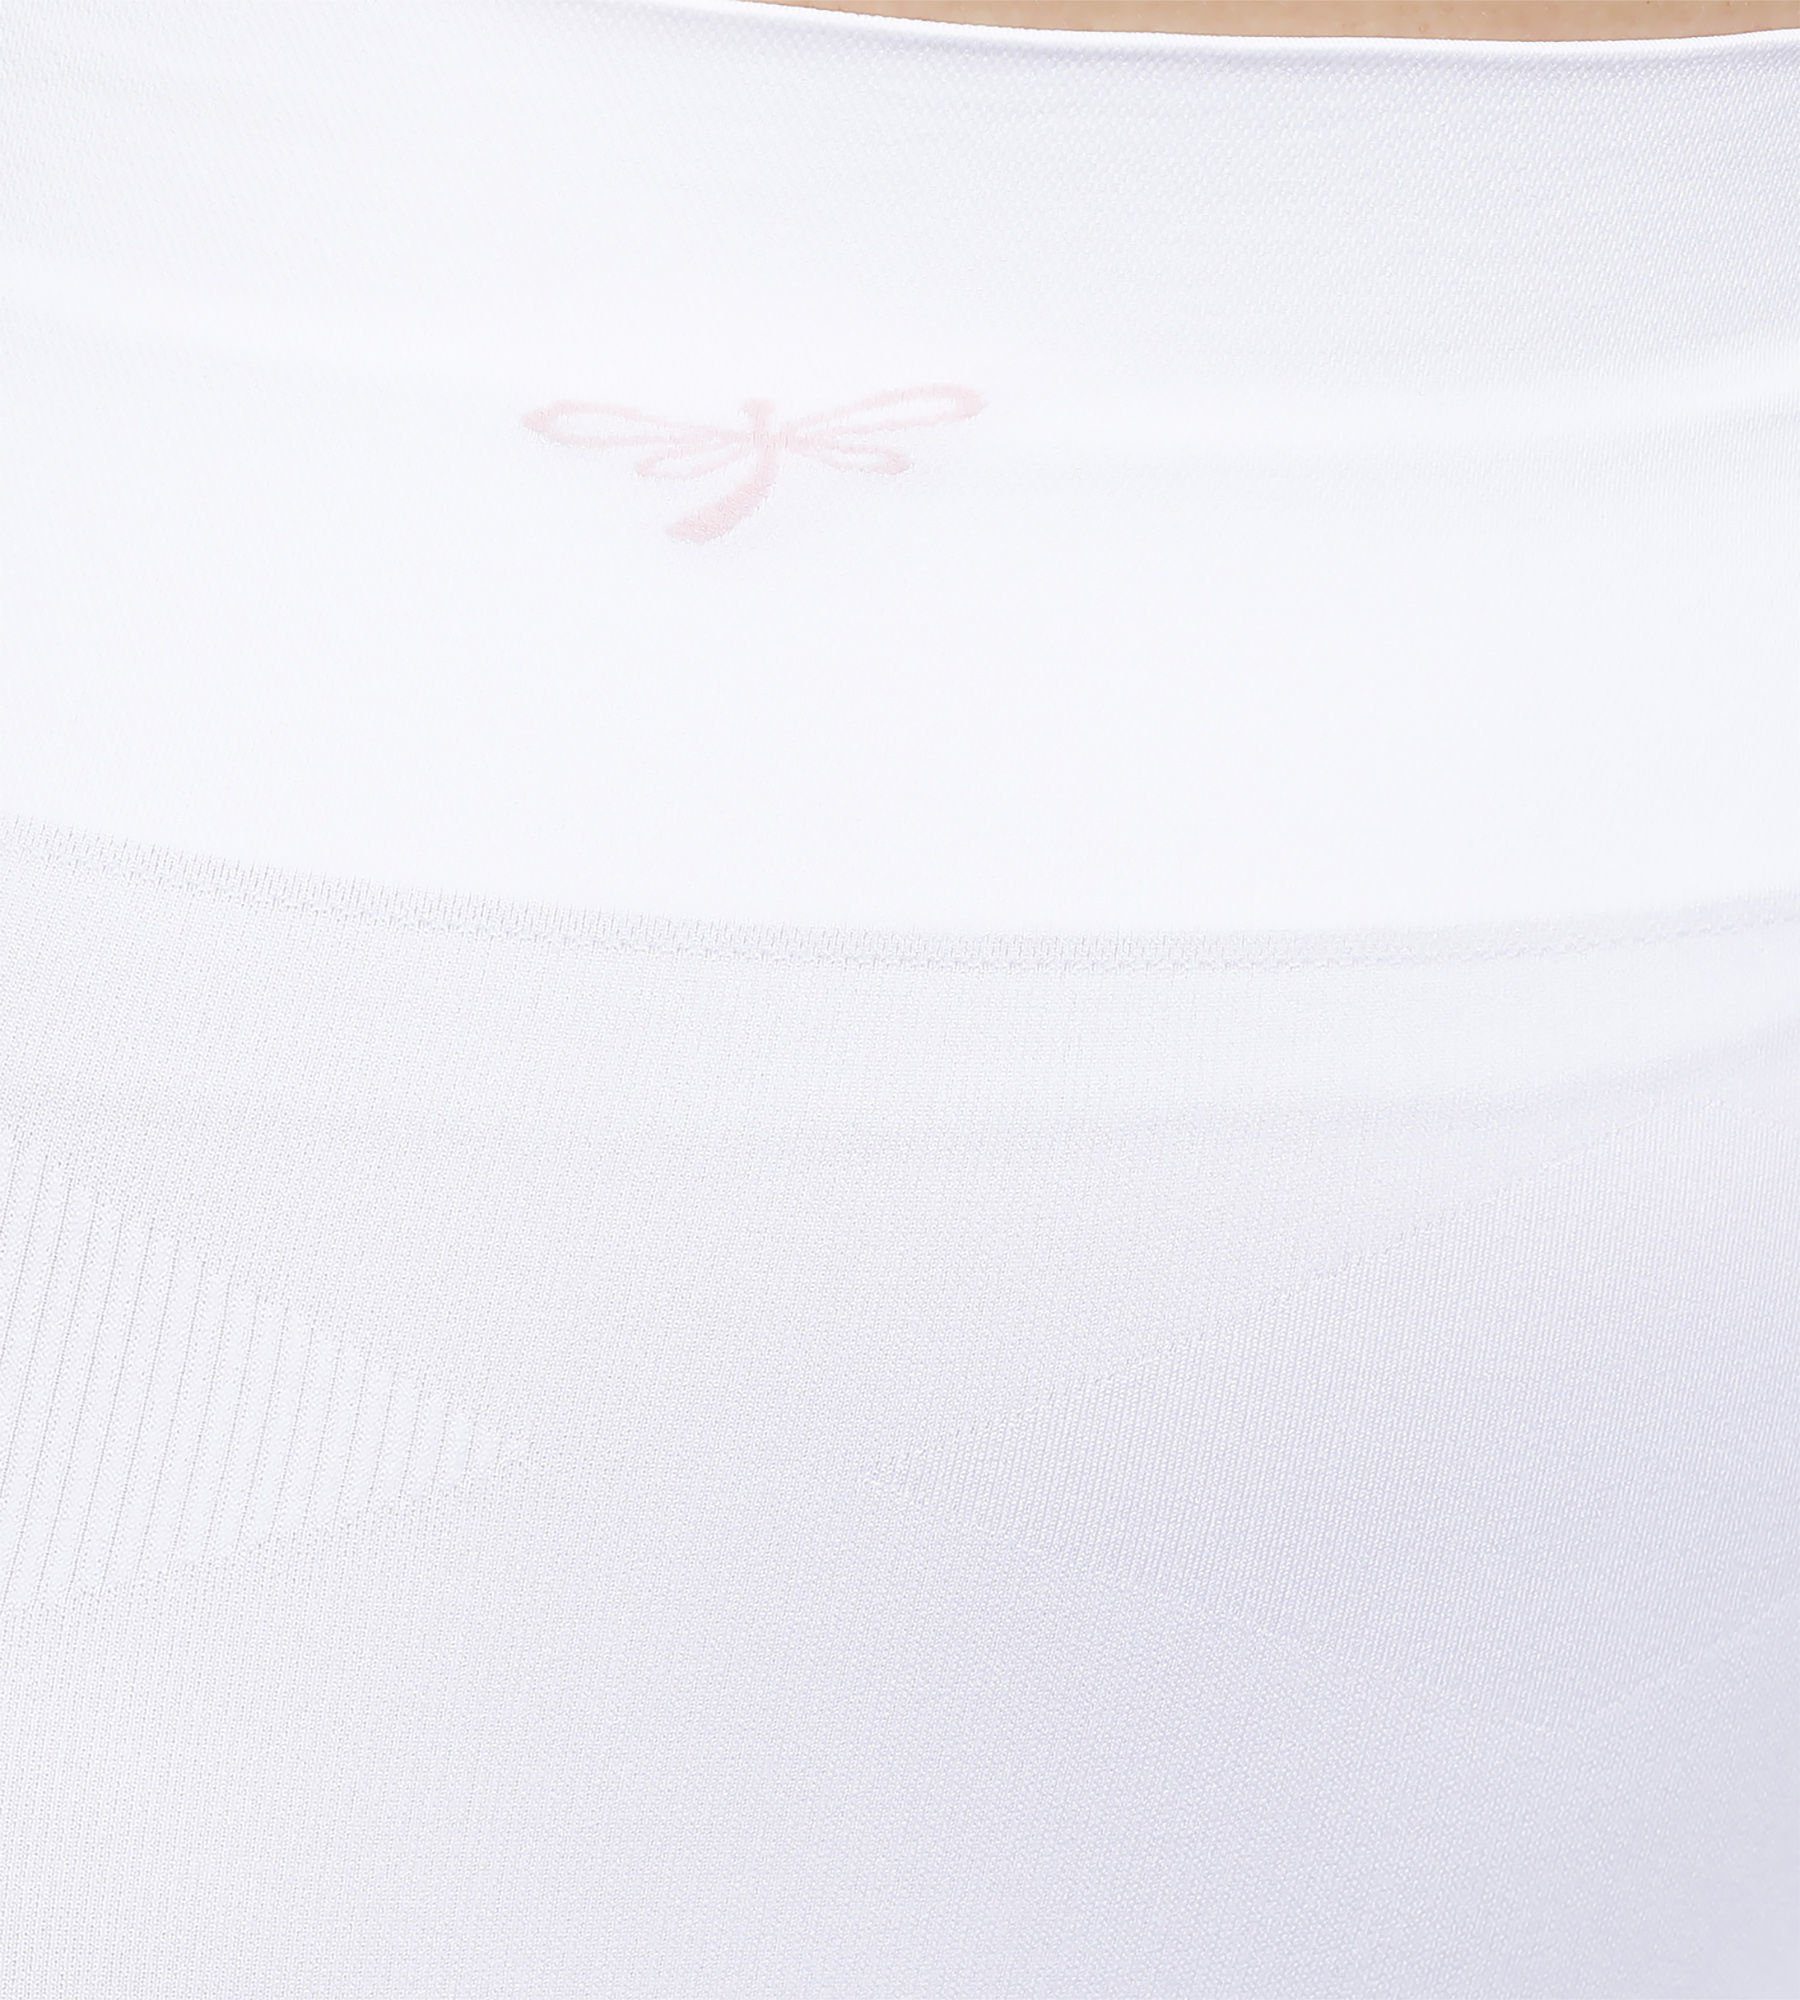 Pure Shape Lüftungszonen Hotpants Shapingpants mit weiß (2er-Set, elastisch 2-teilig)